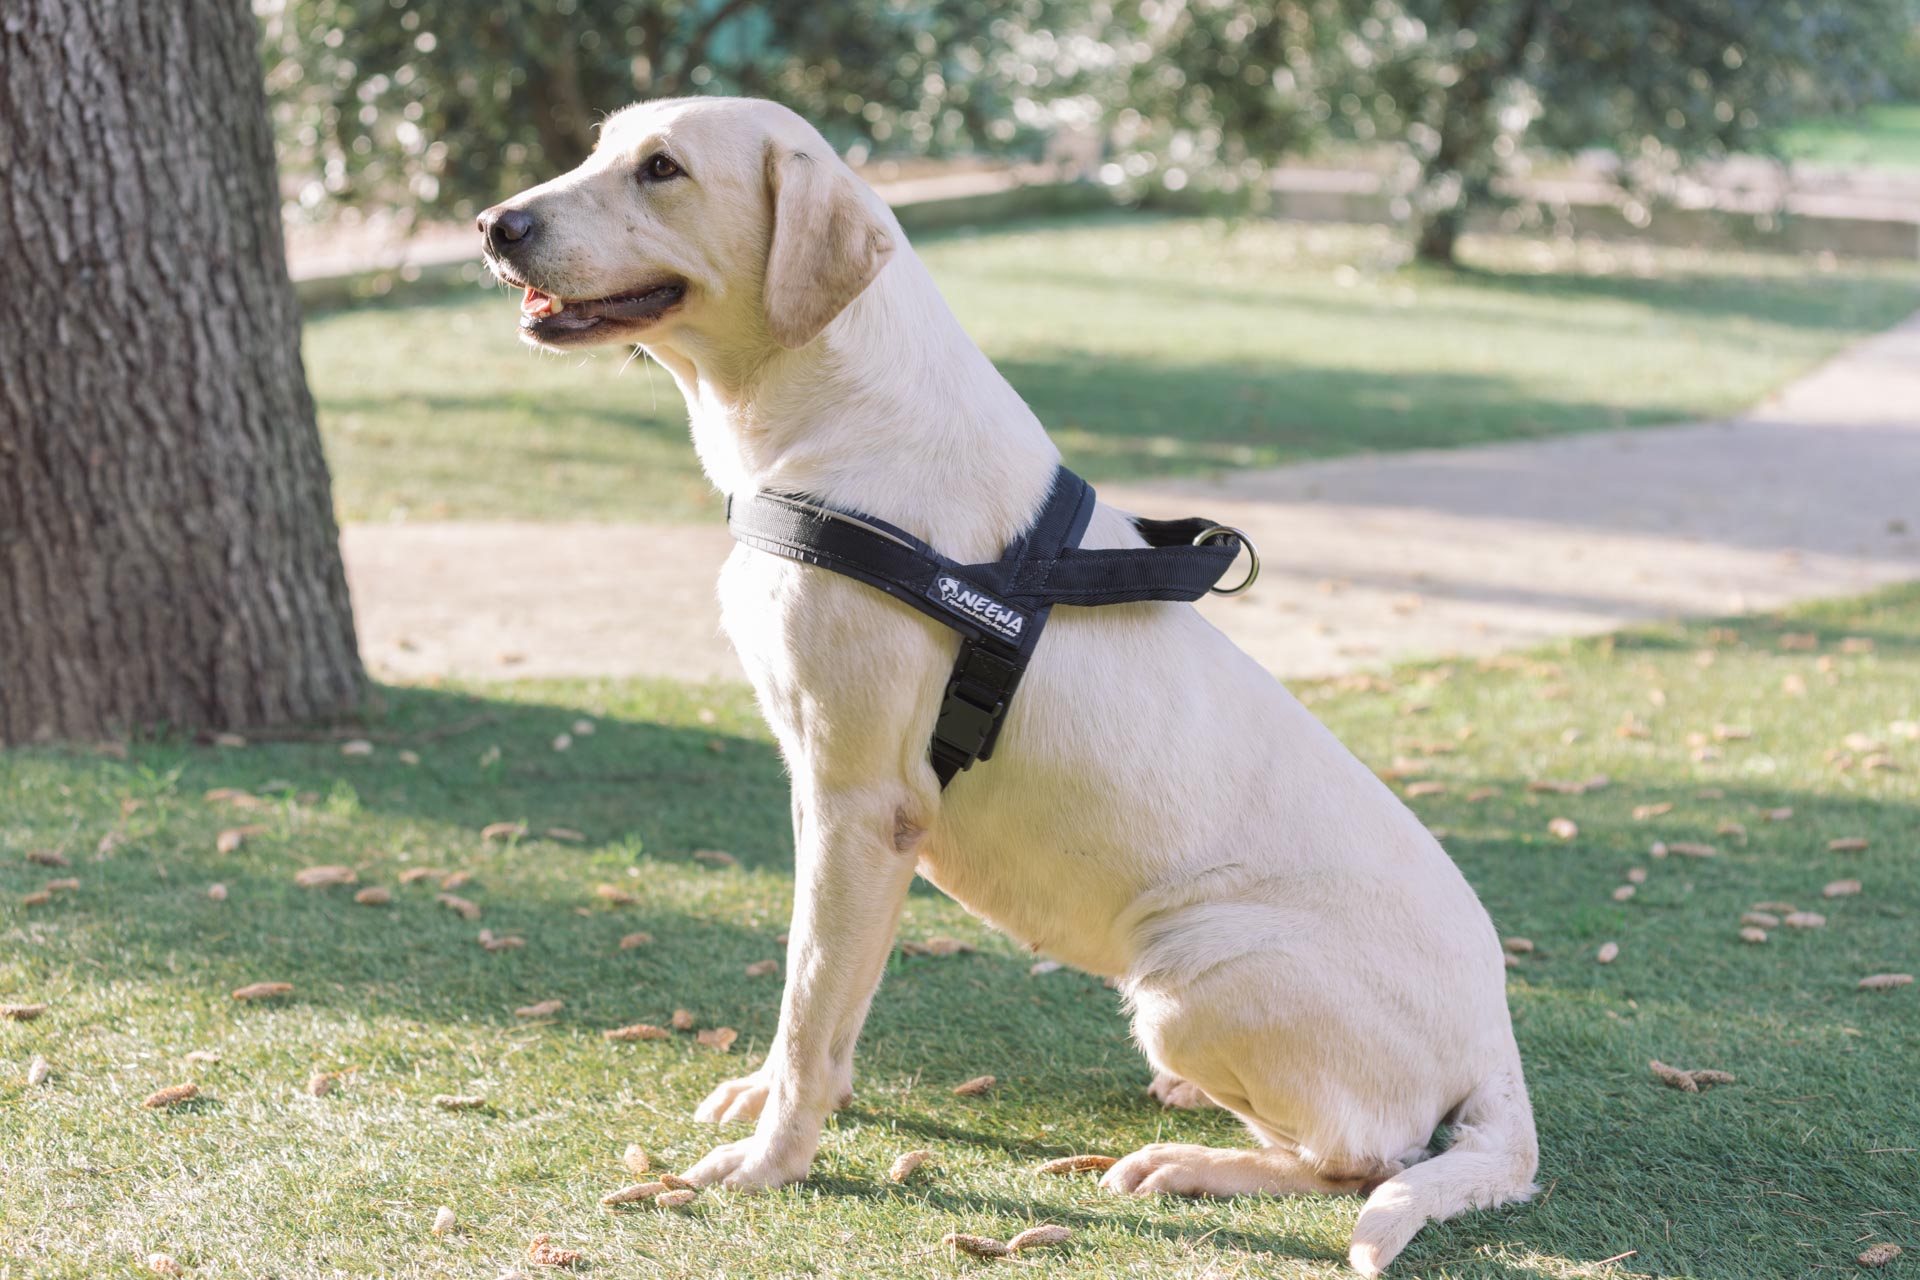 How do you put on a 2 way dog harness?